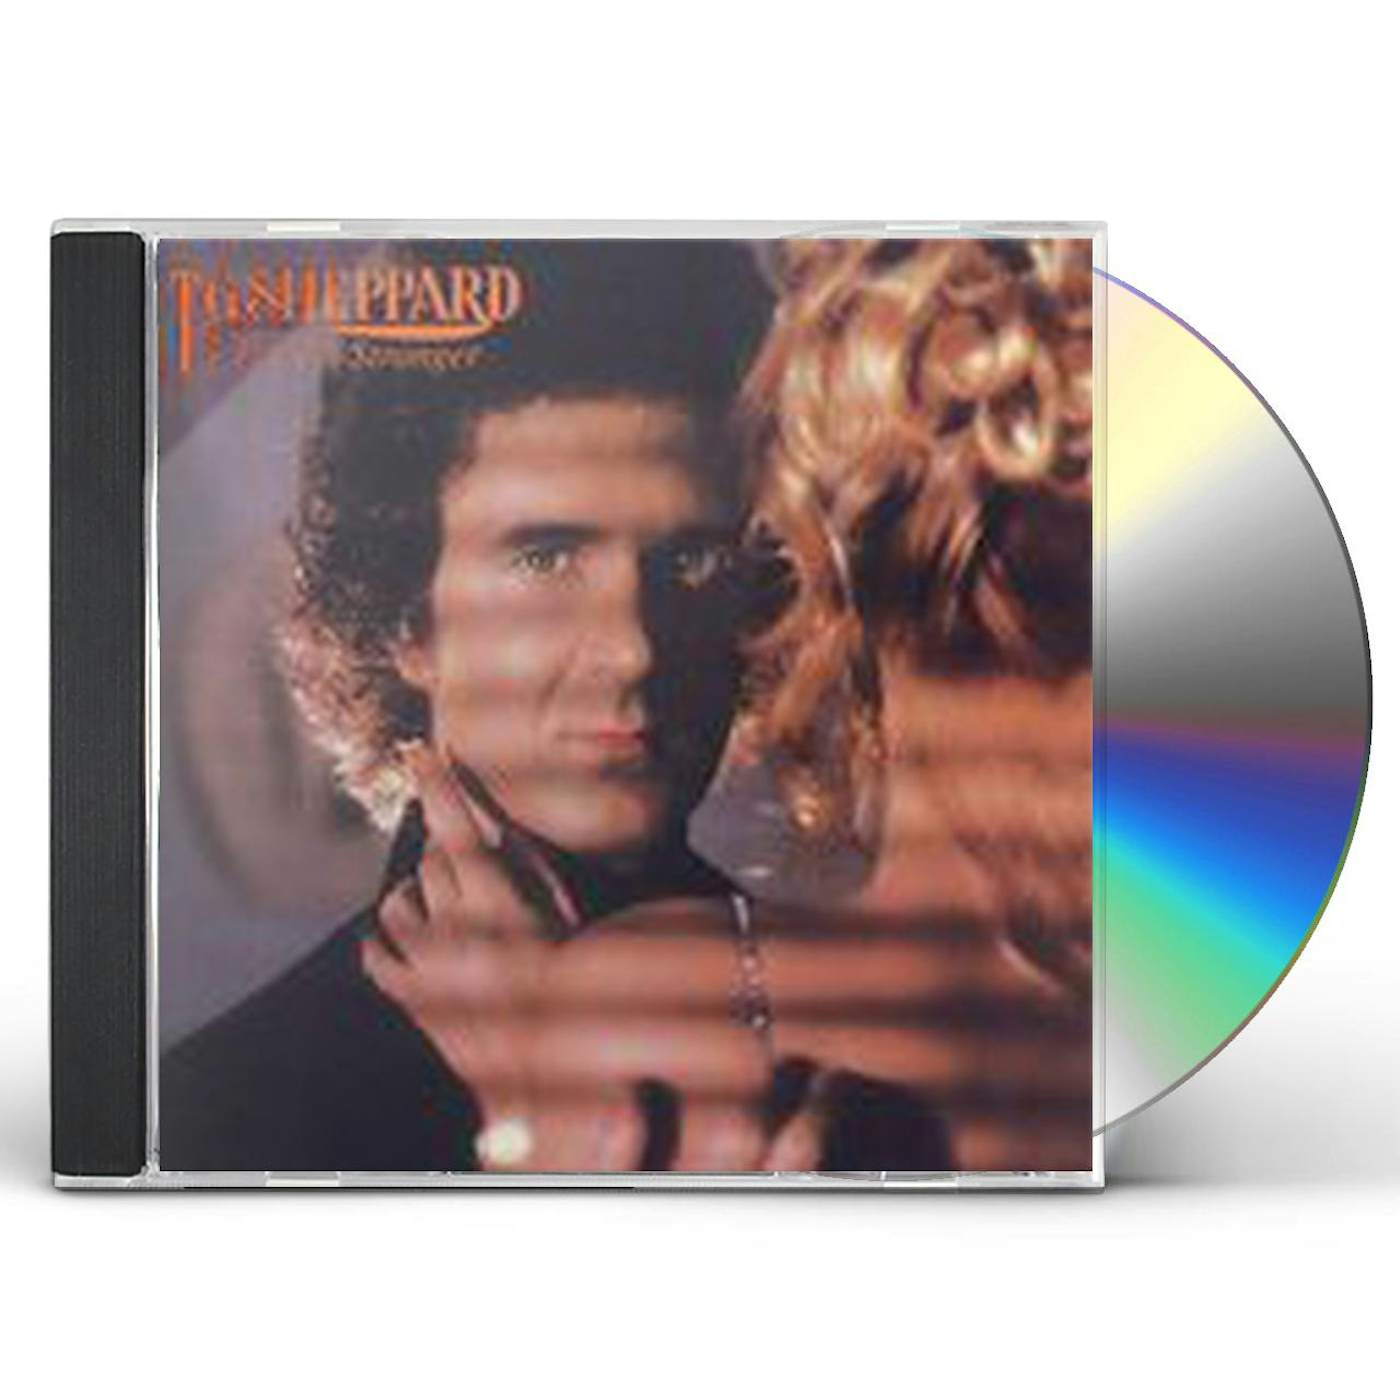 T.G. Sheppard PERFECT STRANGERS CD